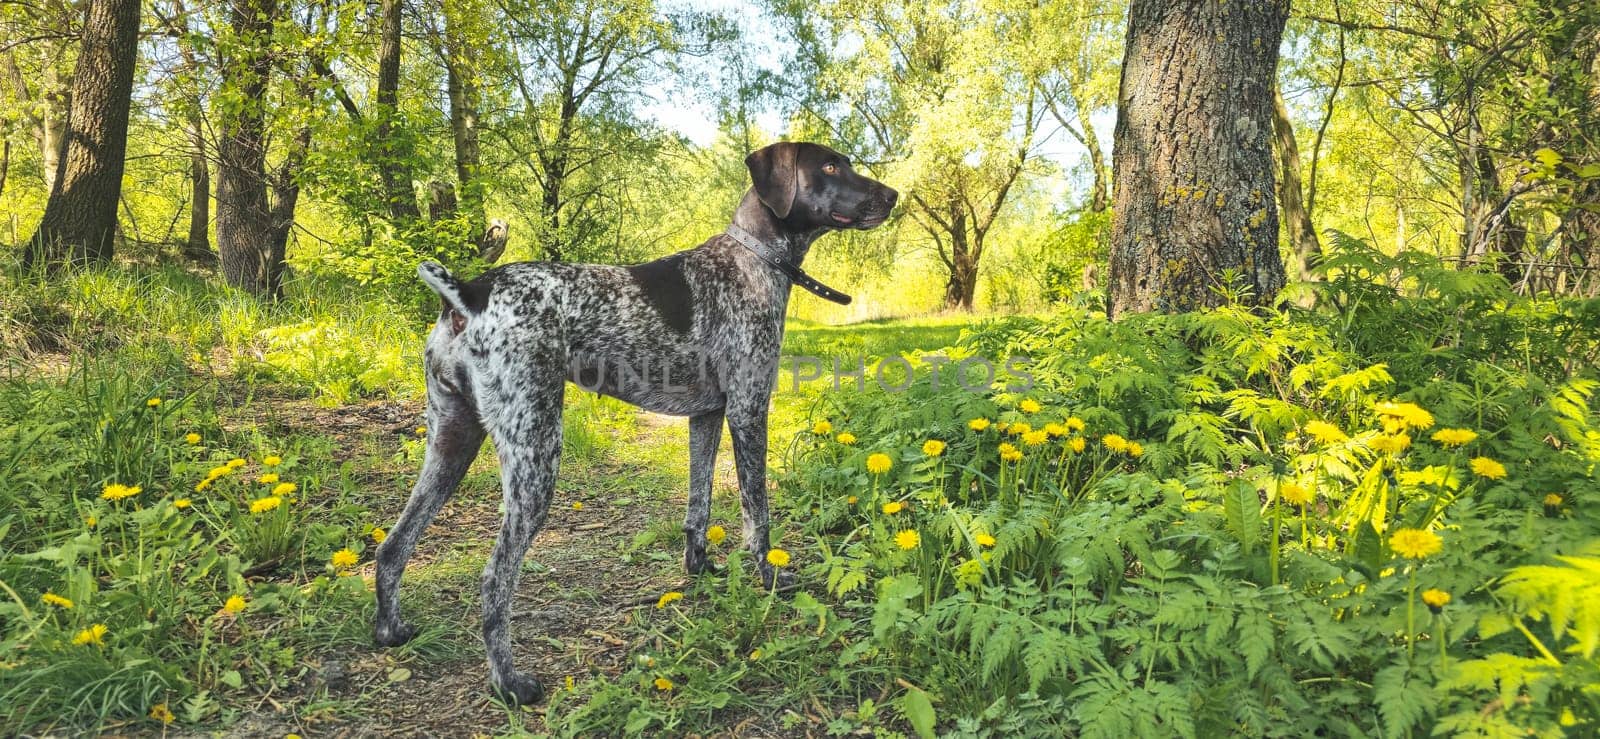 hunting dog among spring greenery, spring and summer